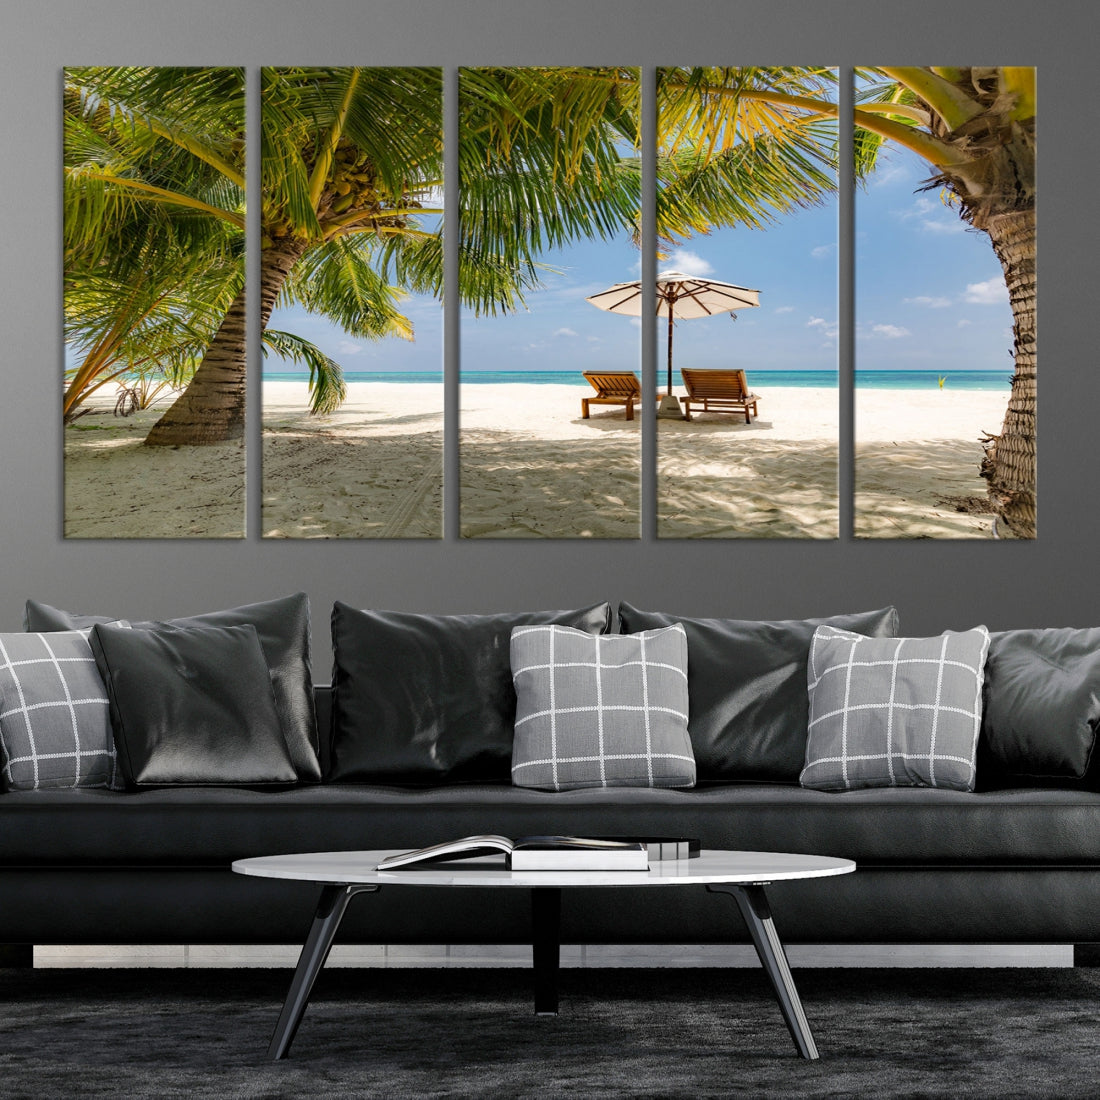 Lounge Chairs Palm Trees on Tropical Beach Canvas Wall Art Print Extra Large Beach Ocean Landscape Canvas Art